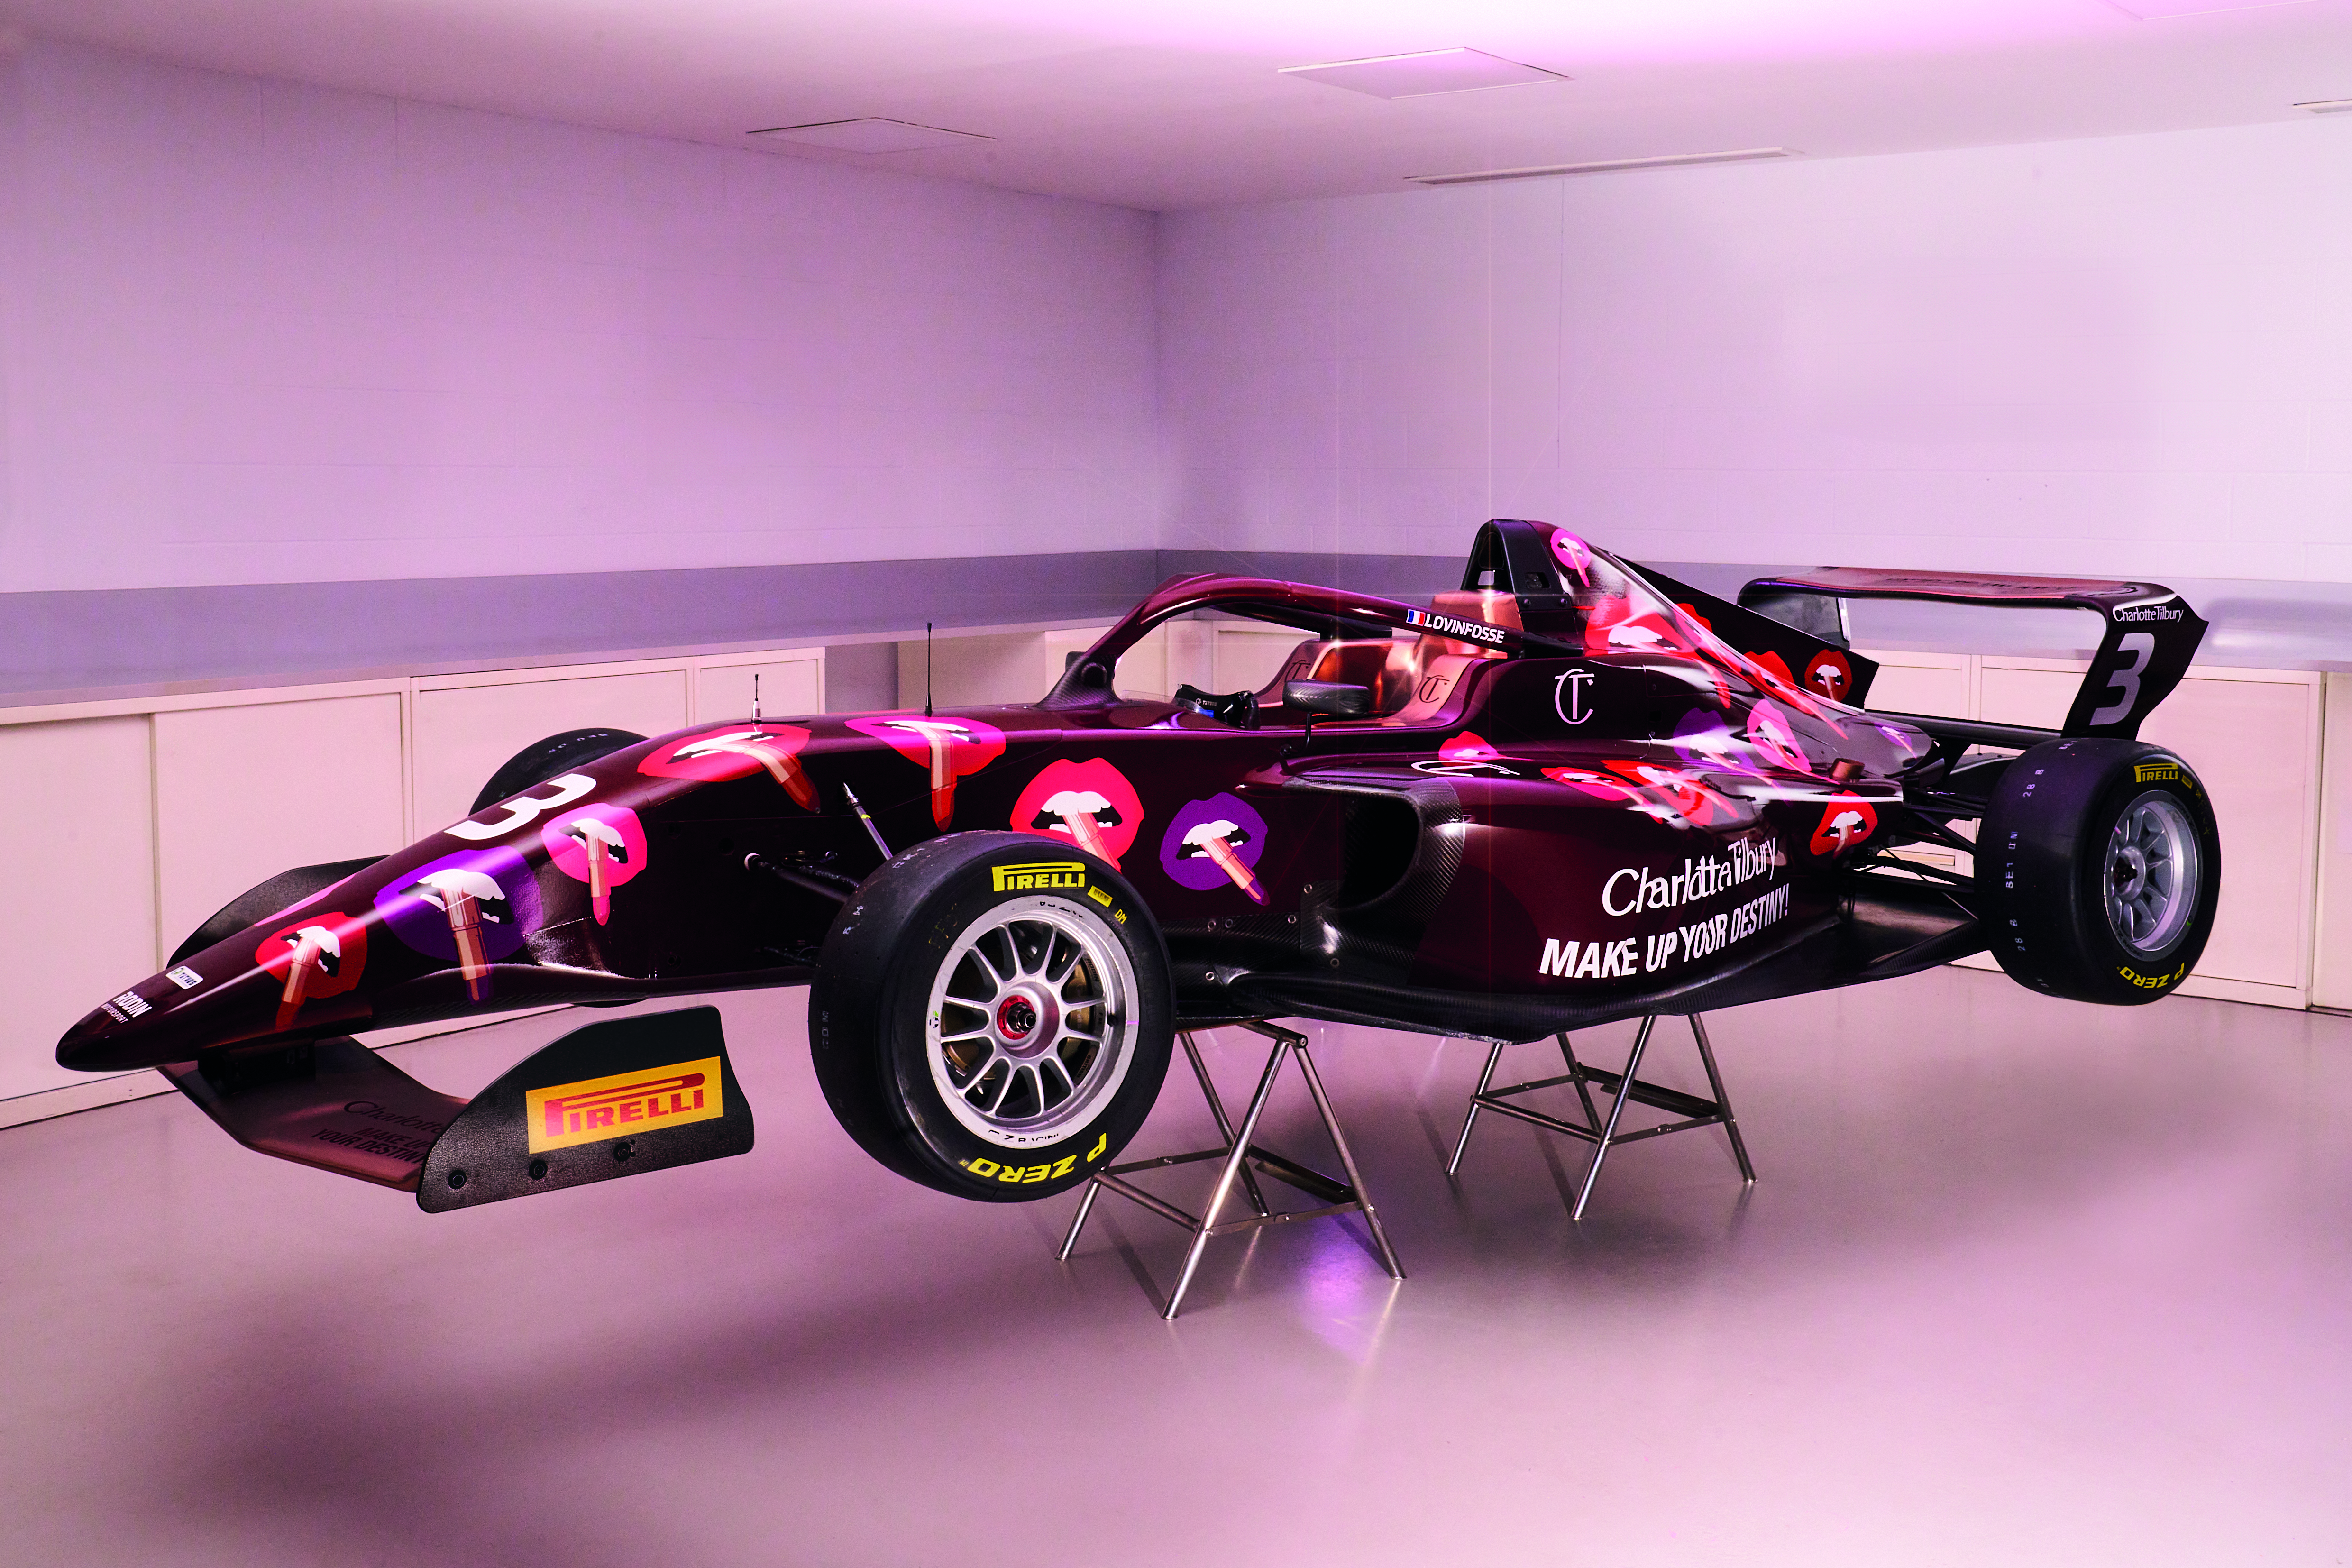 Charlotte Tilbury F1 Academy car